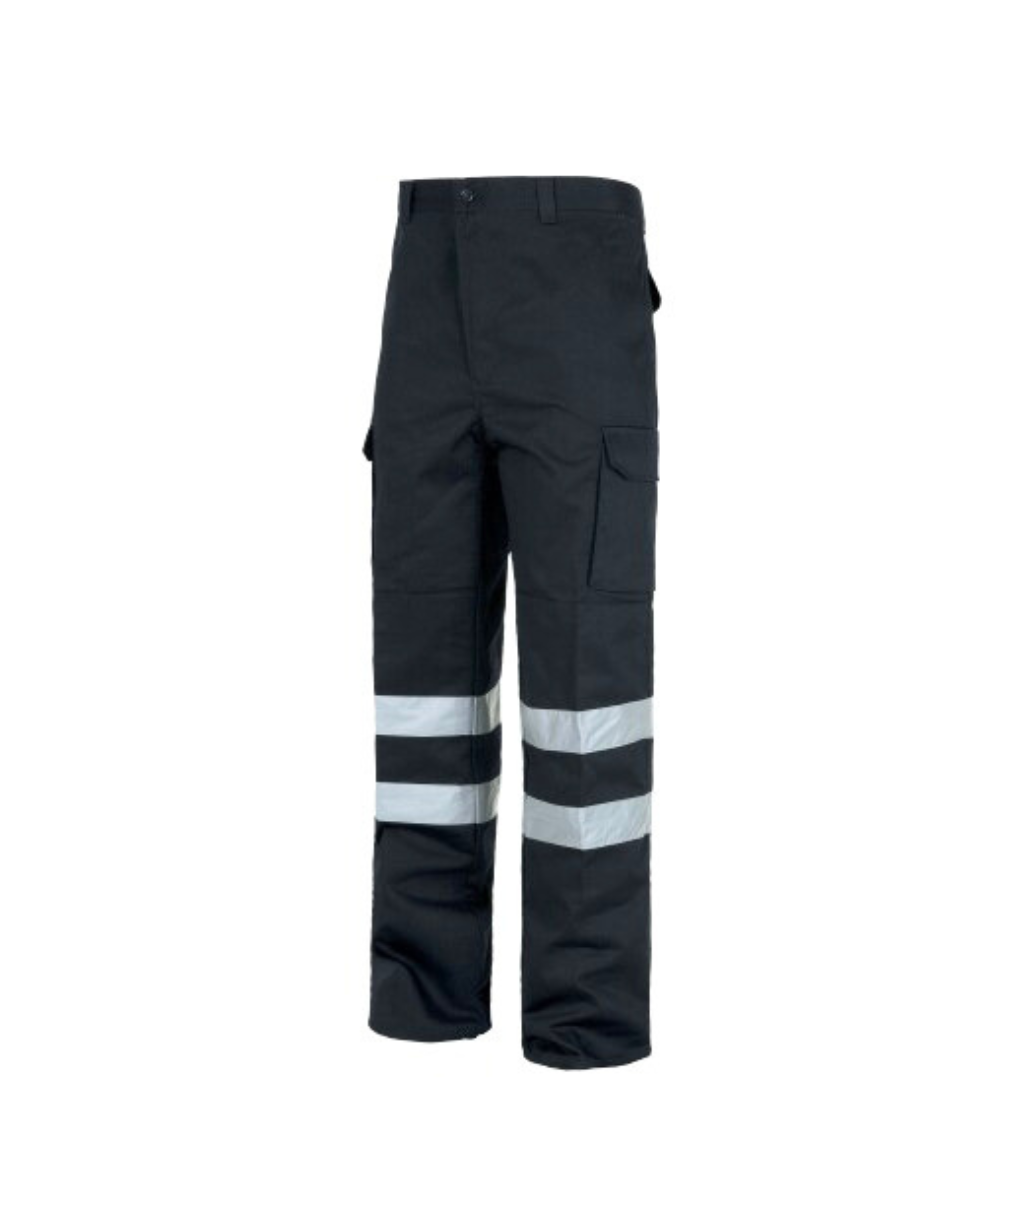 Pantalón de Protección Civil Workteam C4016.